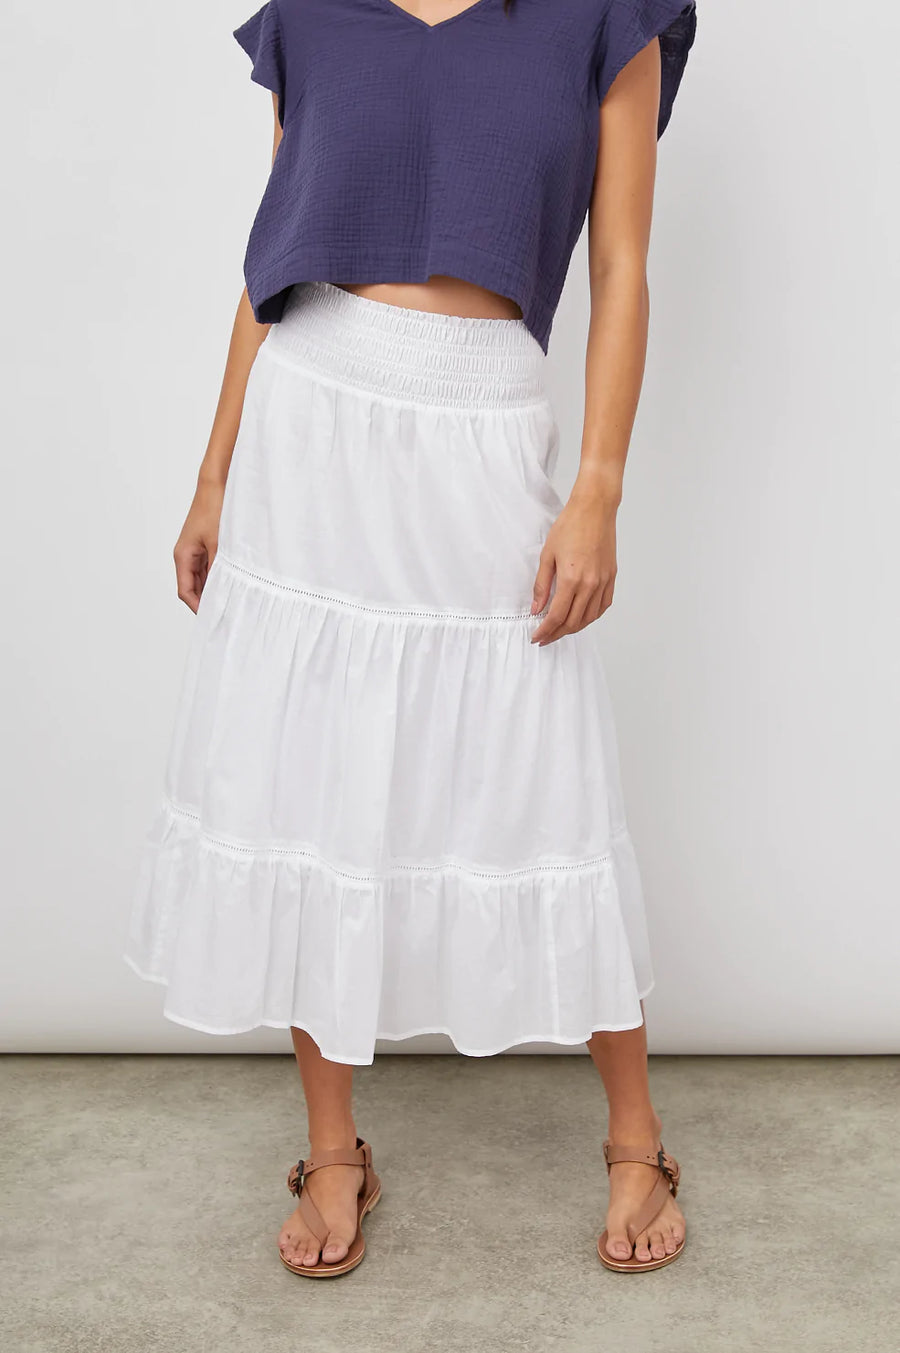 RAILS Edina Skirt in Color: 